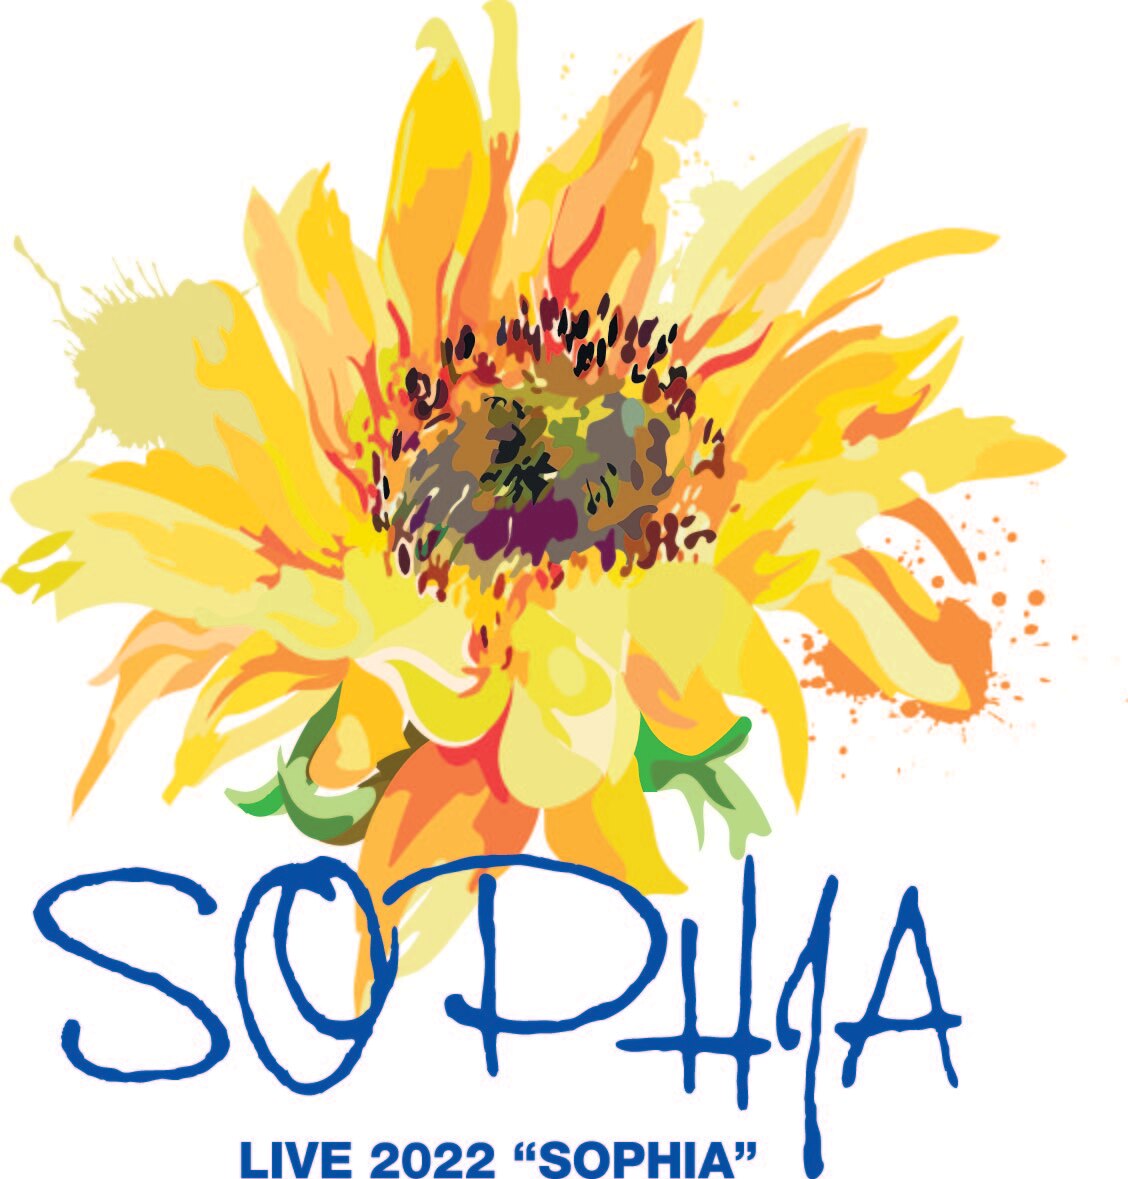 SOPHIA LIVE 2022 “SOPHIA”記念グッズ追加アイテム発売決定＆会場物販 